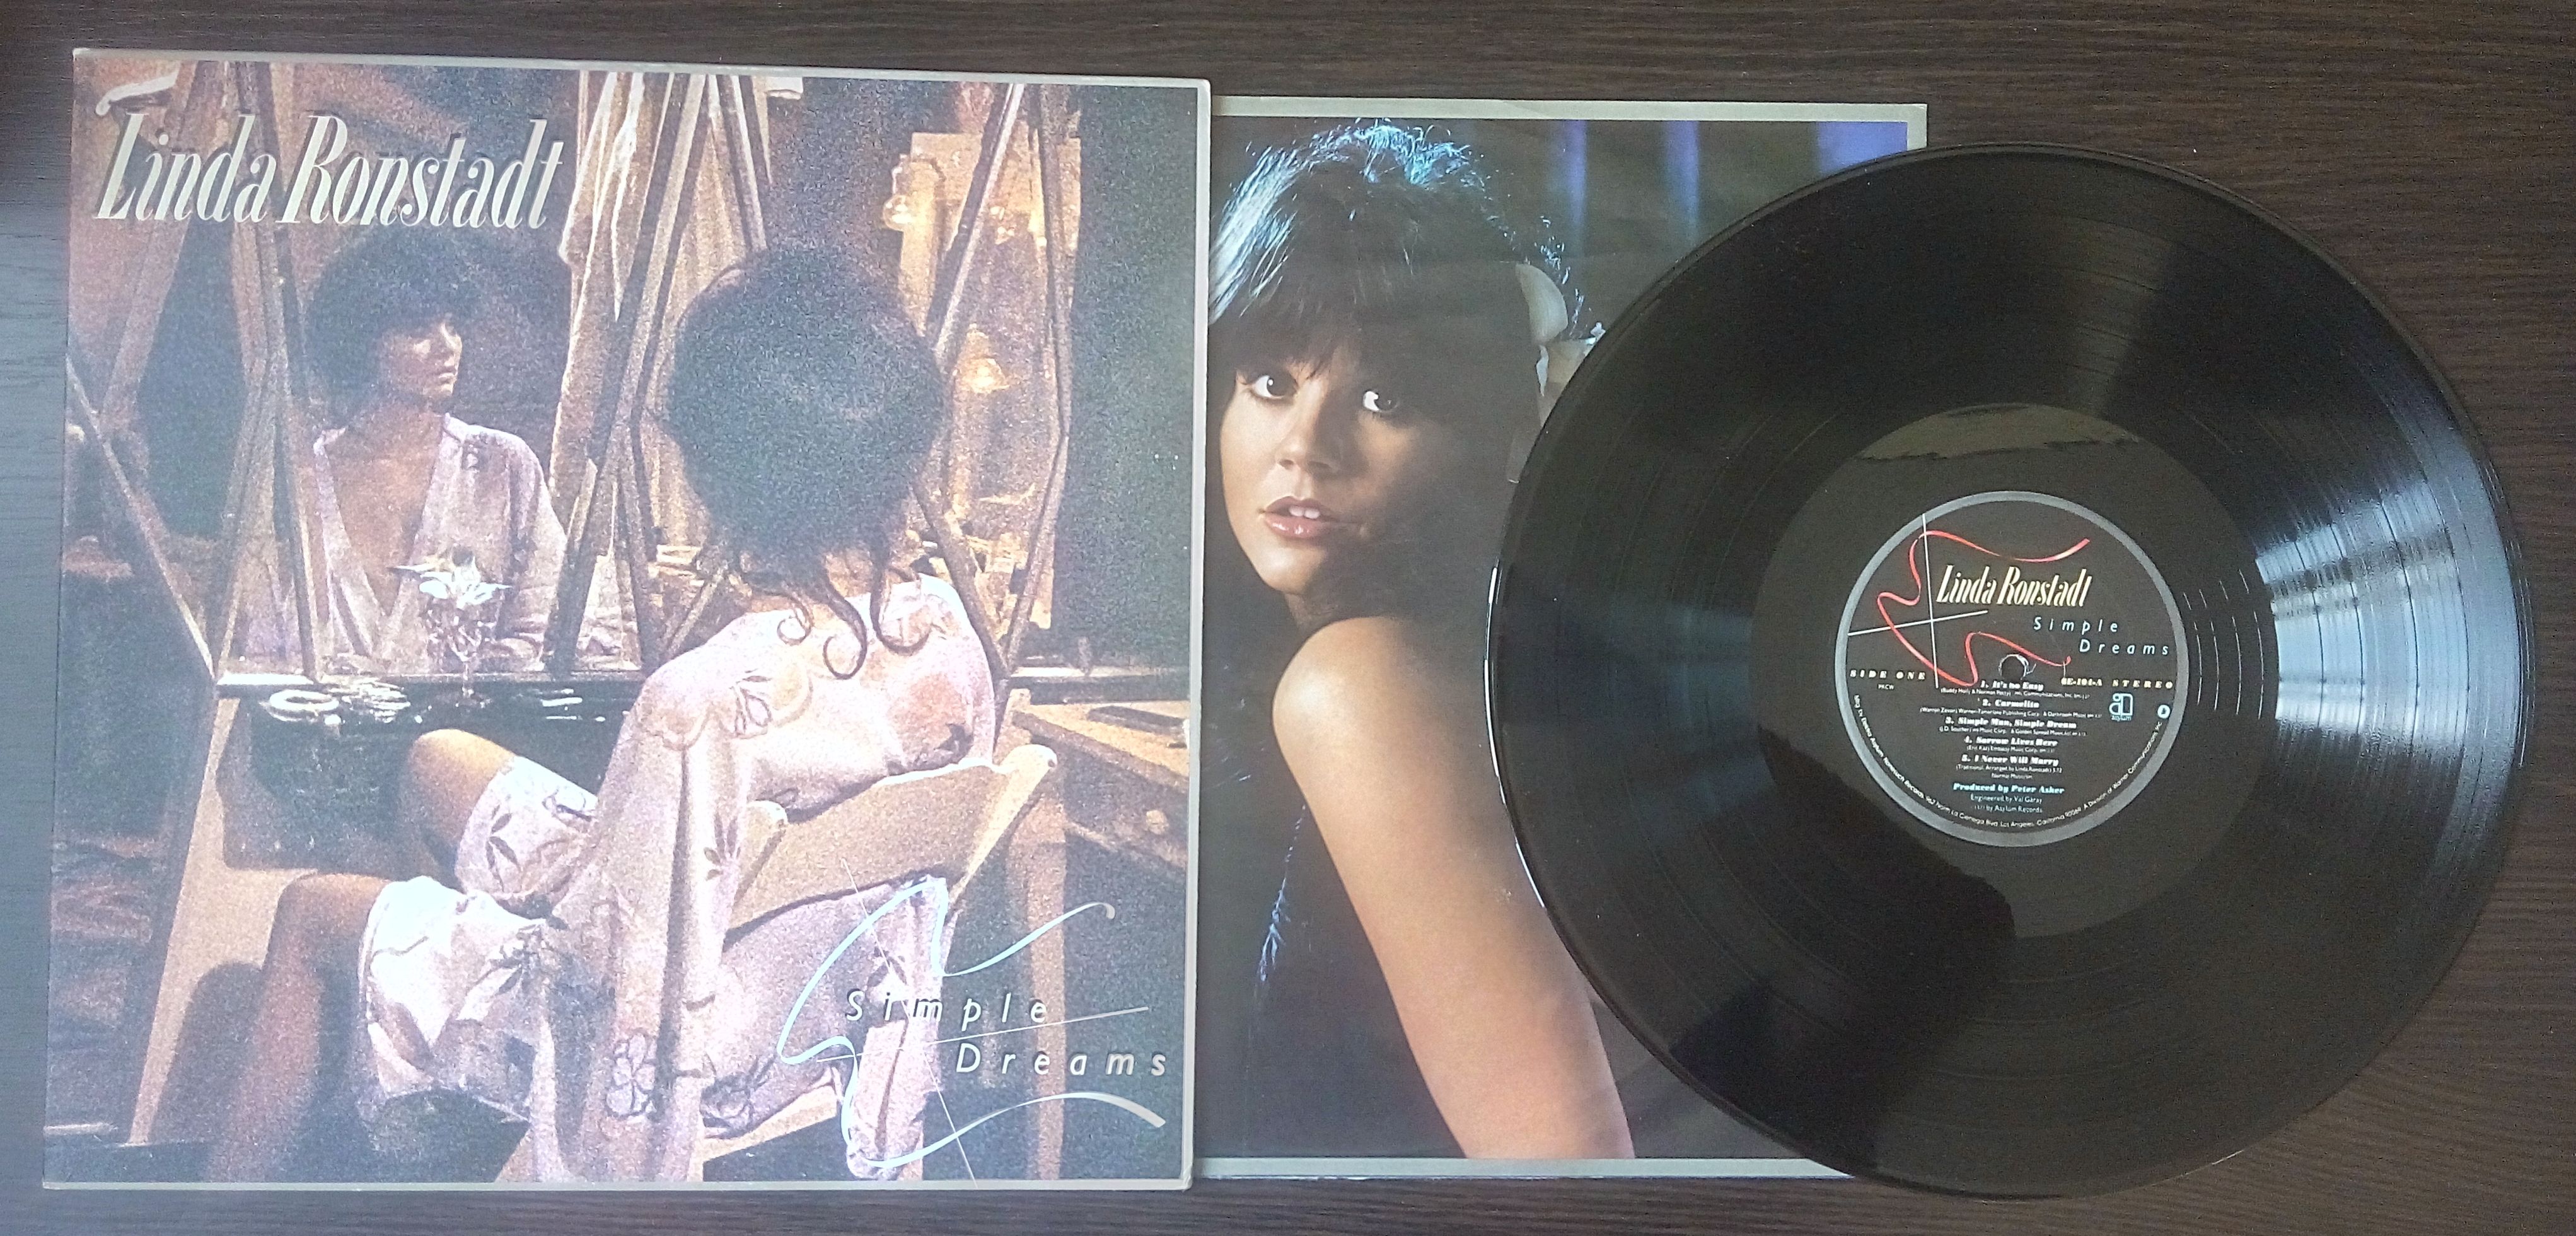 Linda Ronstadt Simple dreams (Vinyl Records, LP, CD) on CDandLP